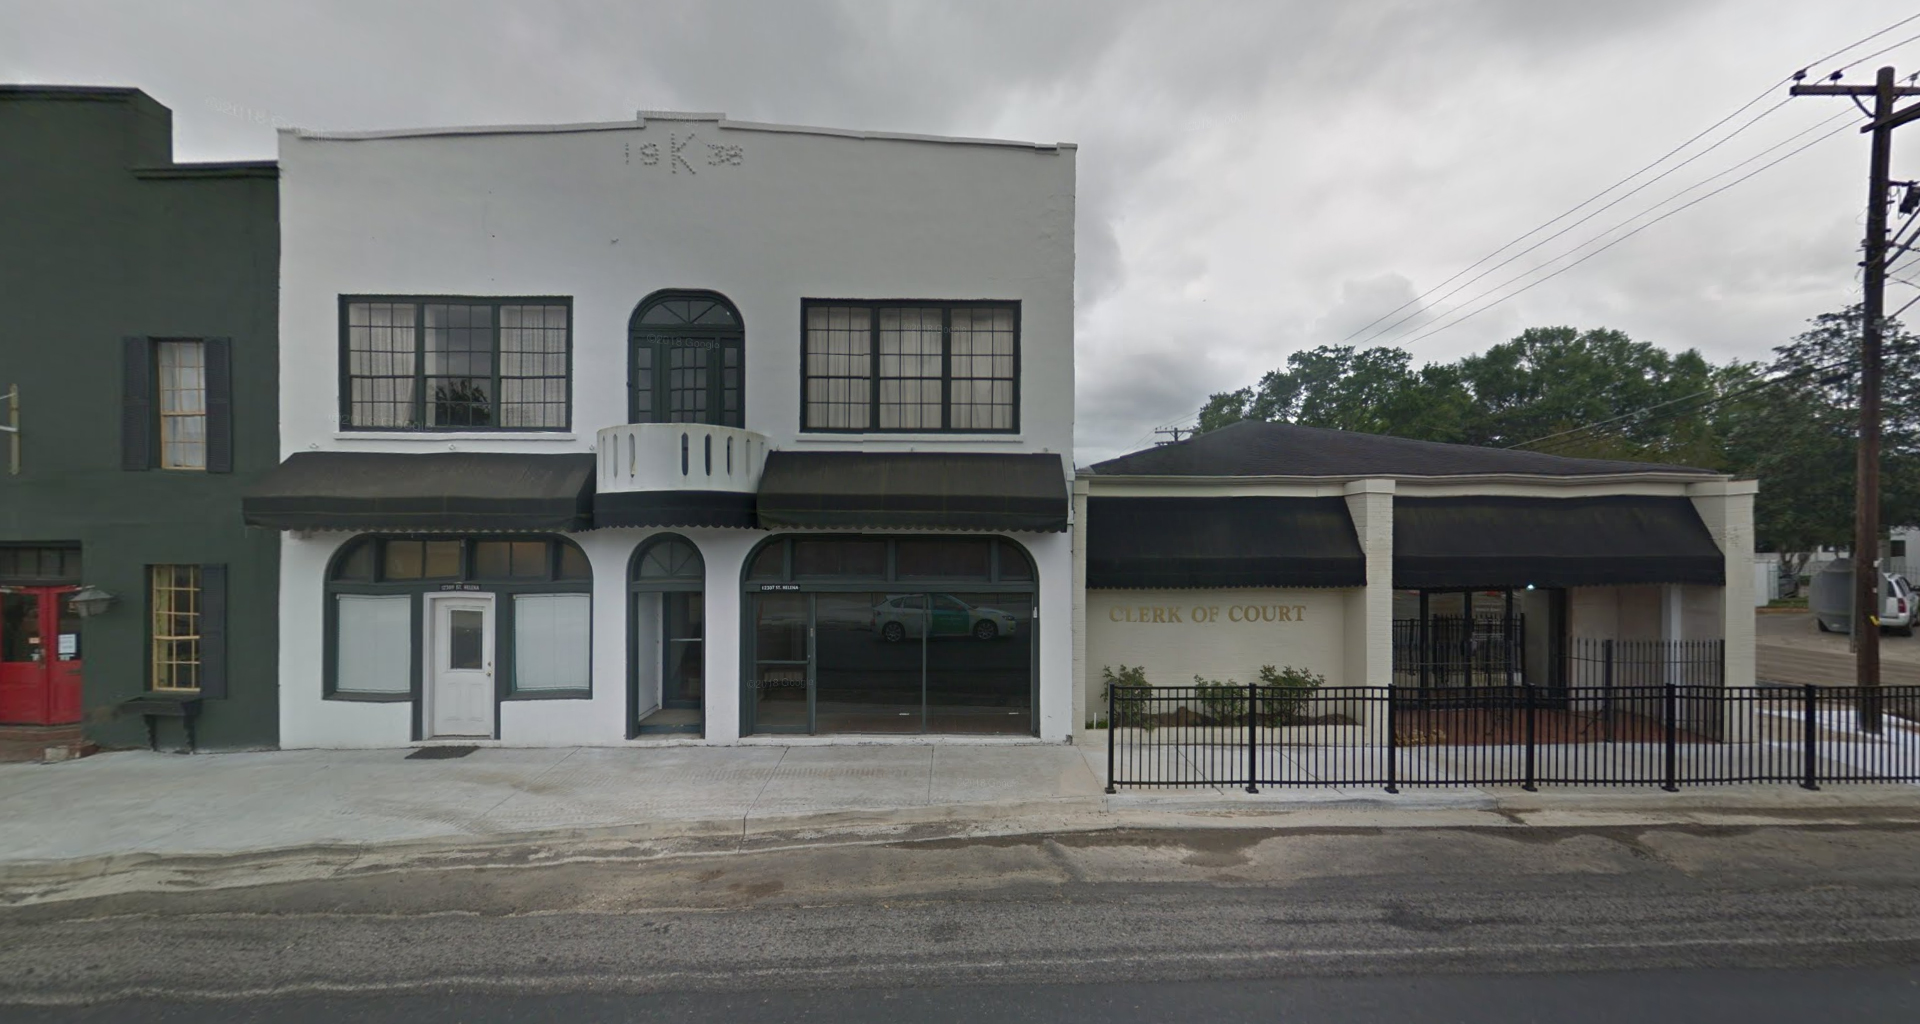 East Feliciana Parish Vital Records in CLINTON, Louisiana | Vital Records Office for Birth ...